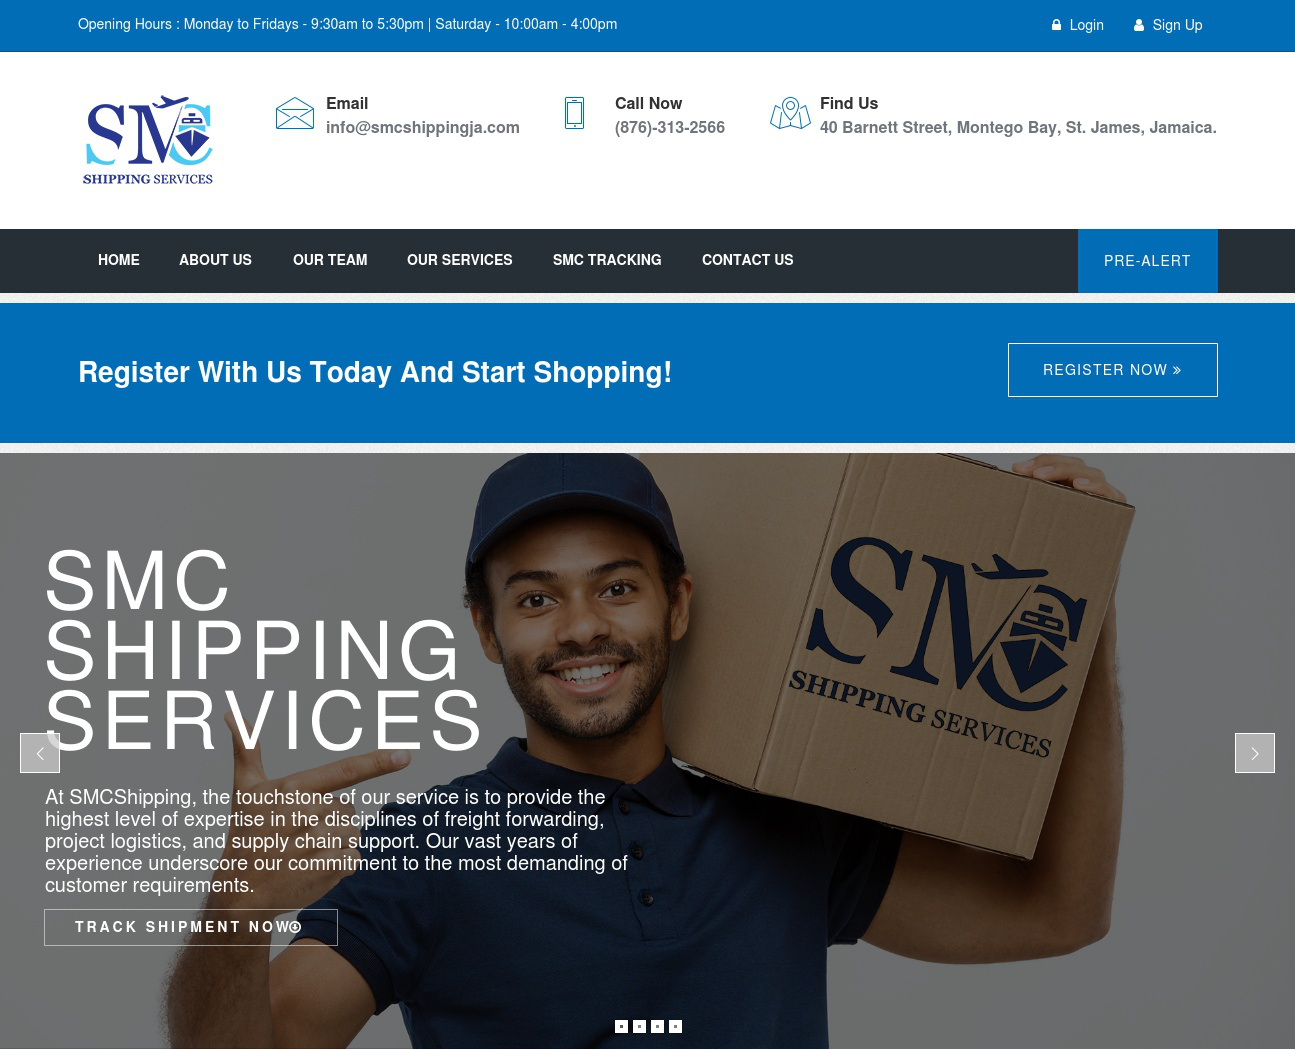 SMC Shipping